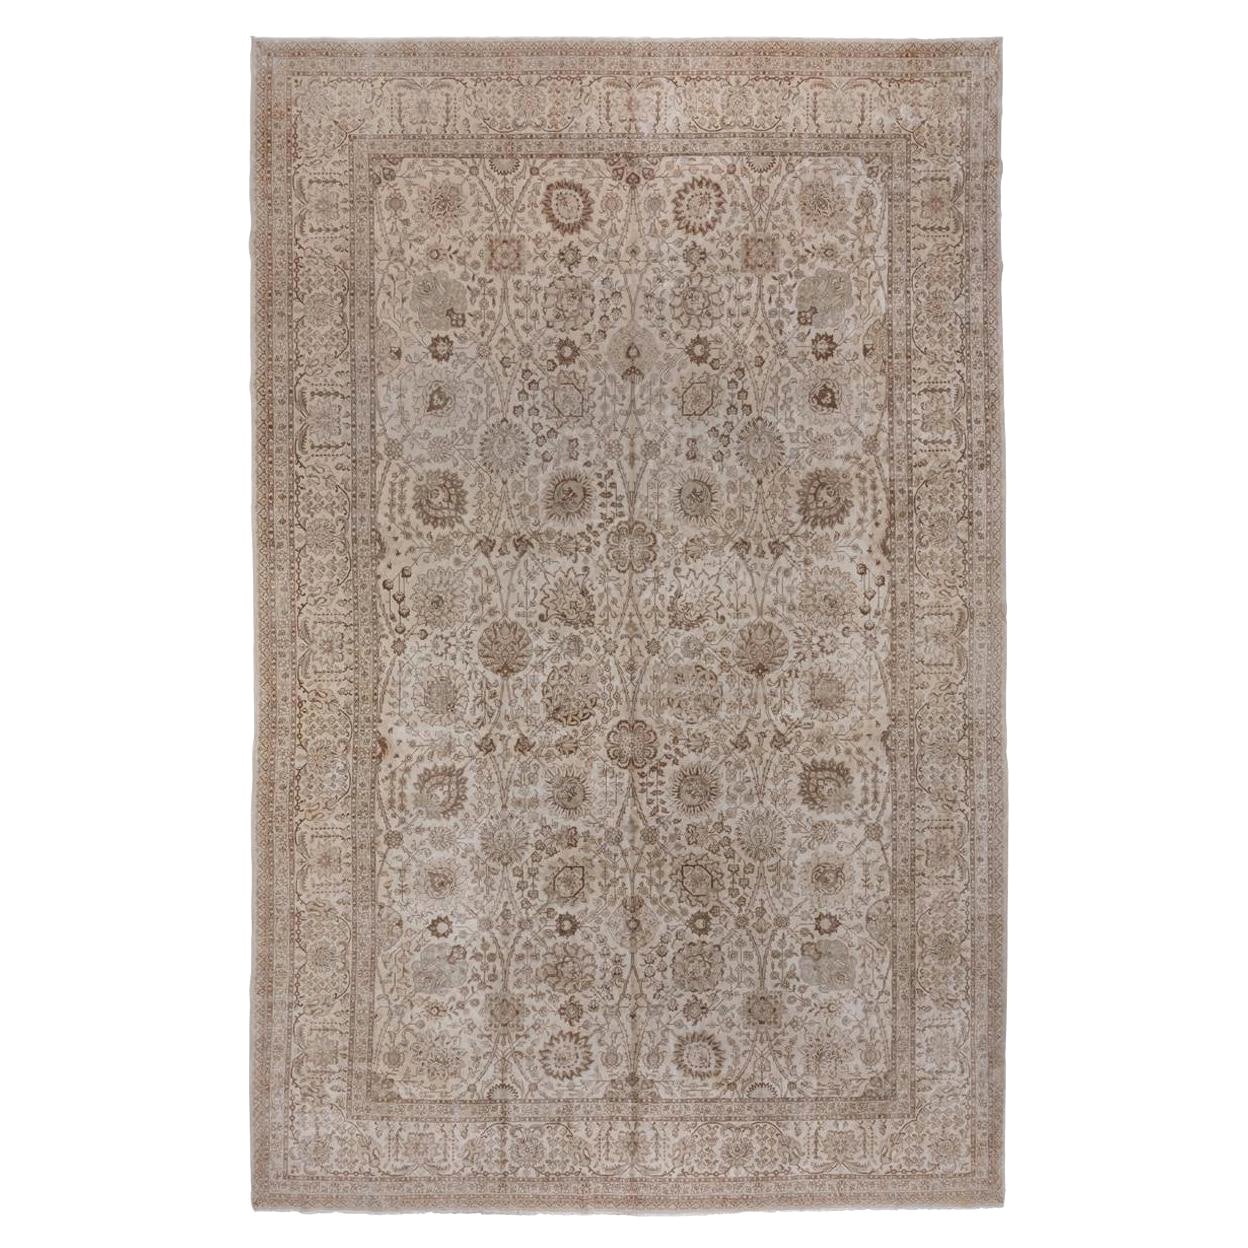 Antique Tabriz Carpet, Ivory Field For Sale